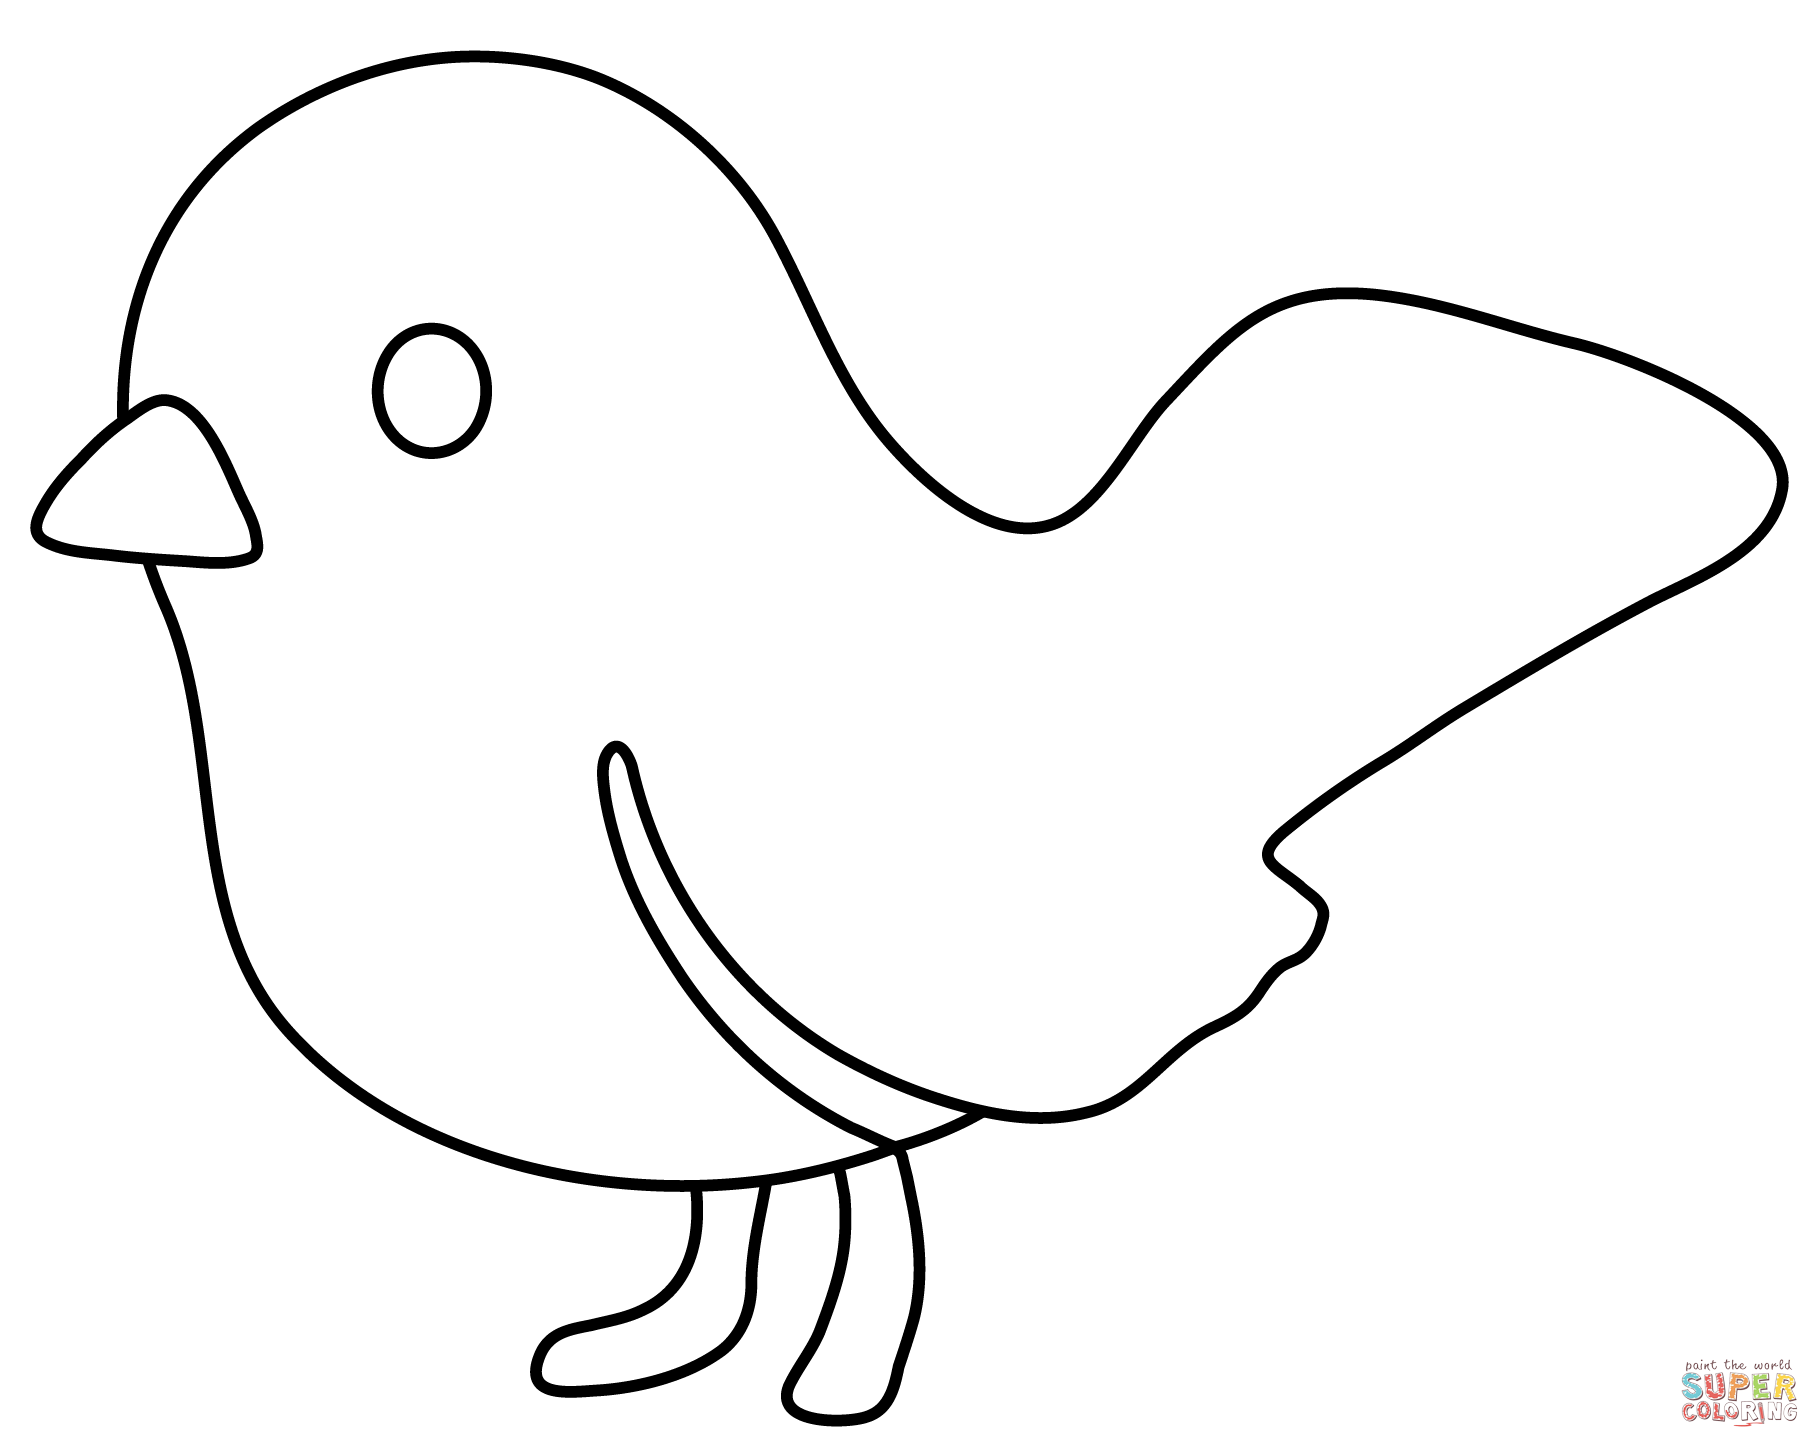 Bird emoji coloring page free printable coloring pages